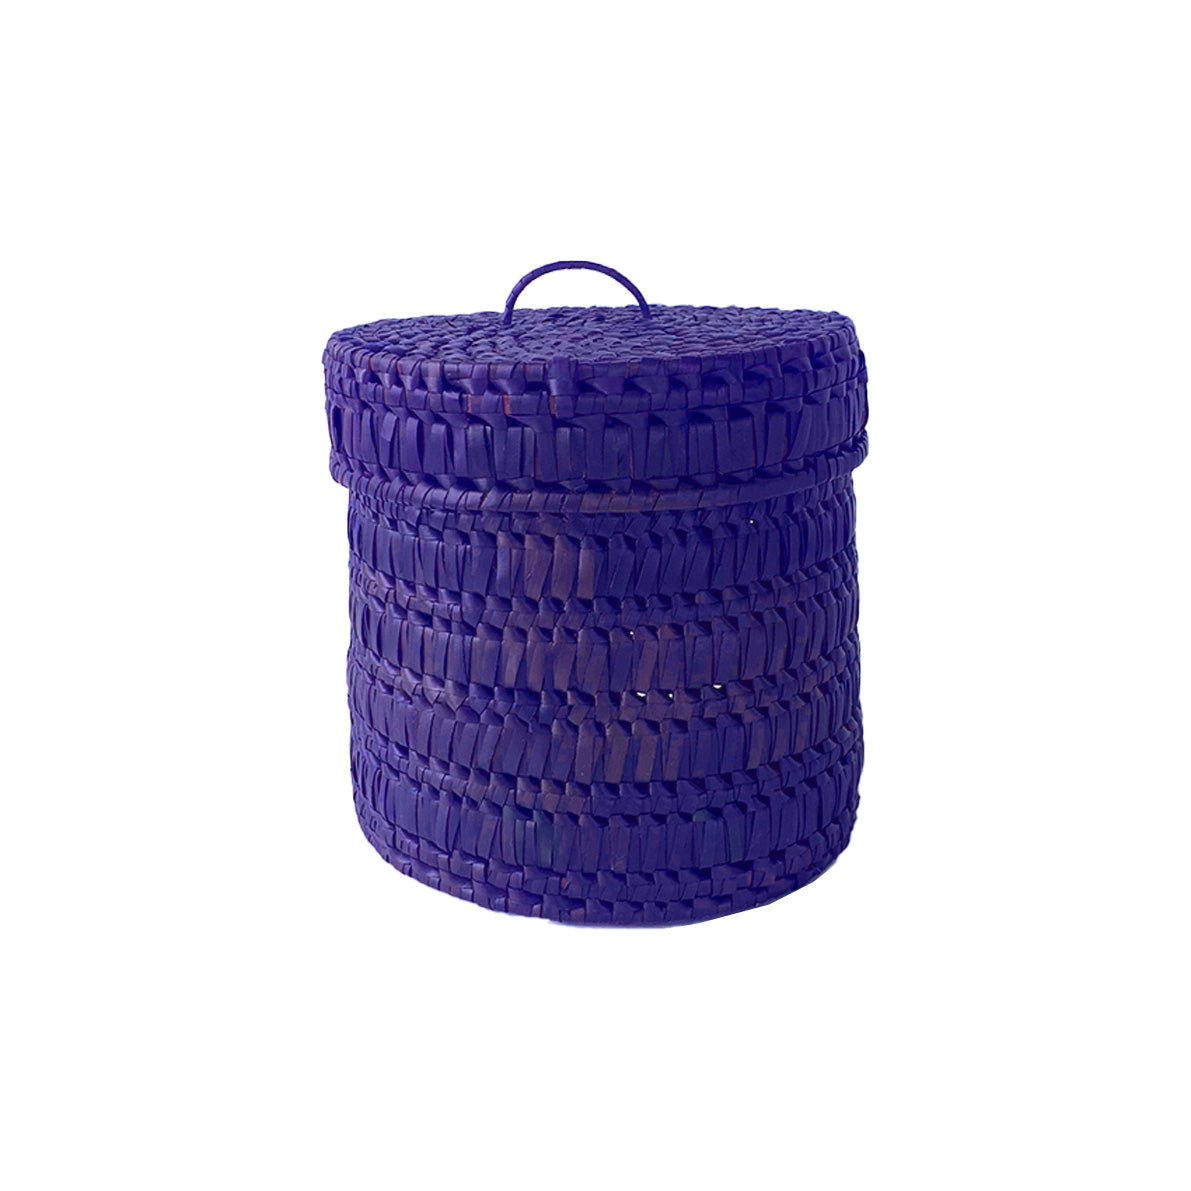 Palmyrah storage bin with cover - Purple - Shipping Now